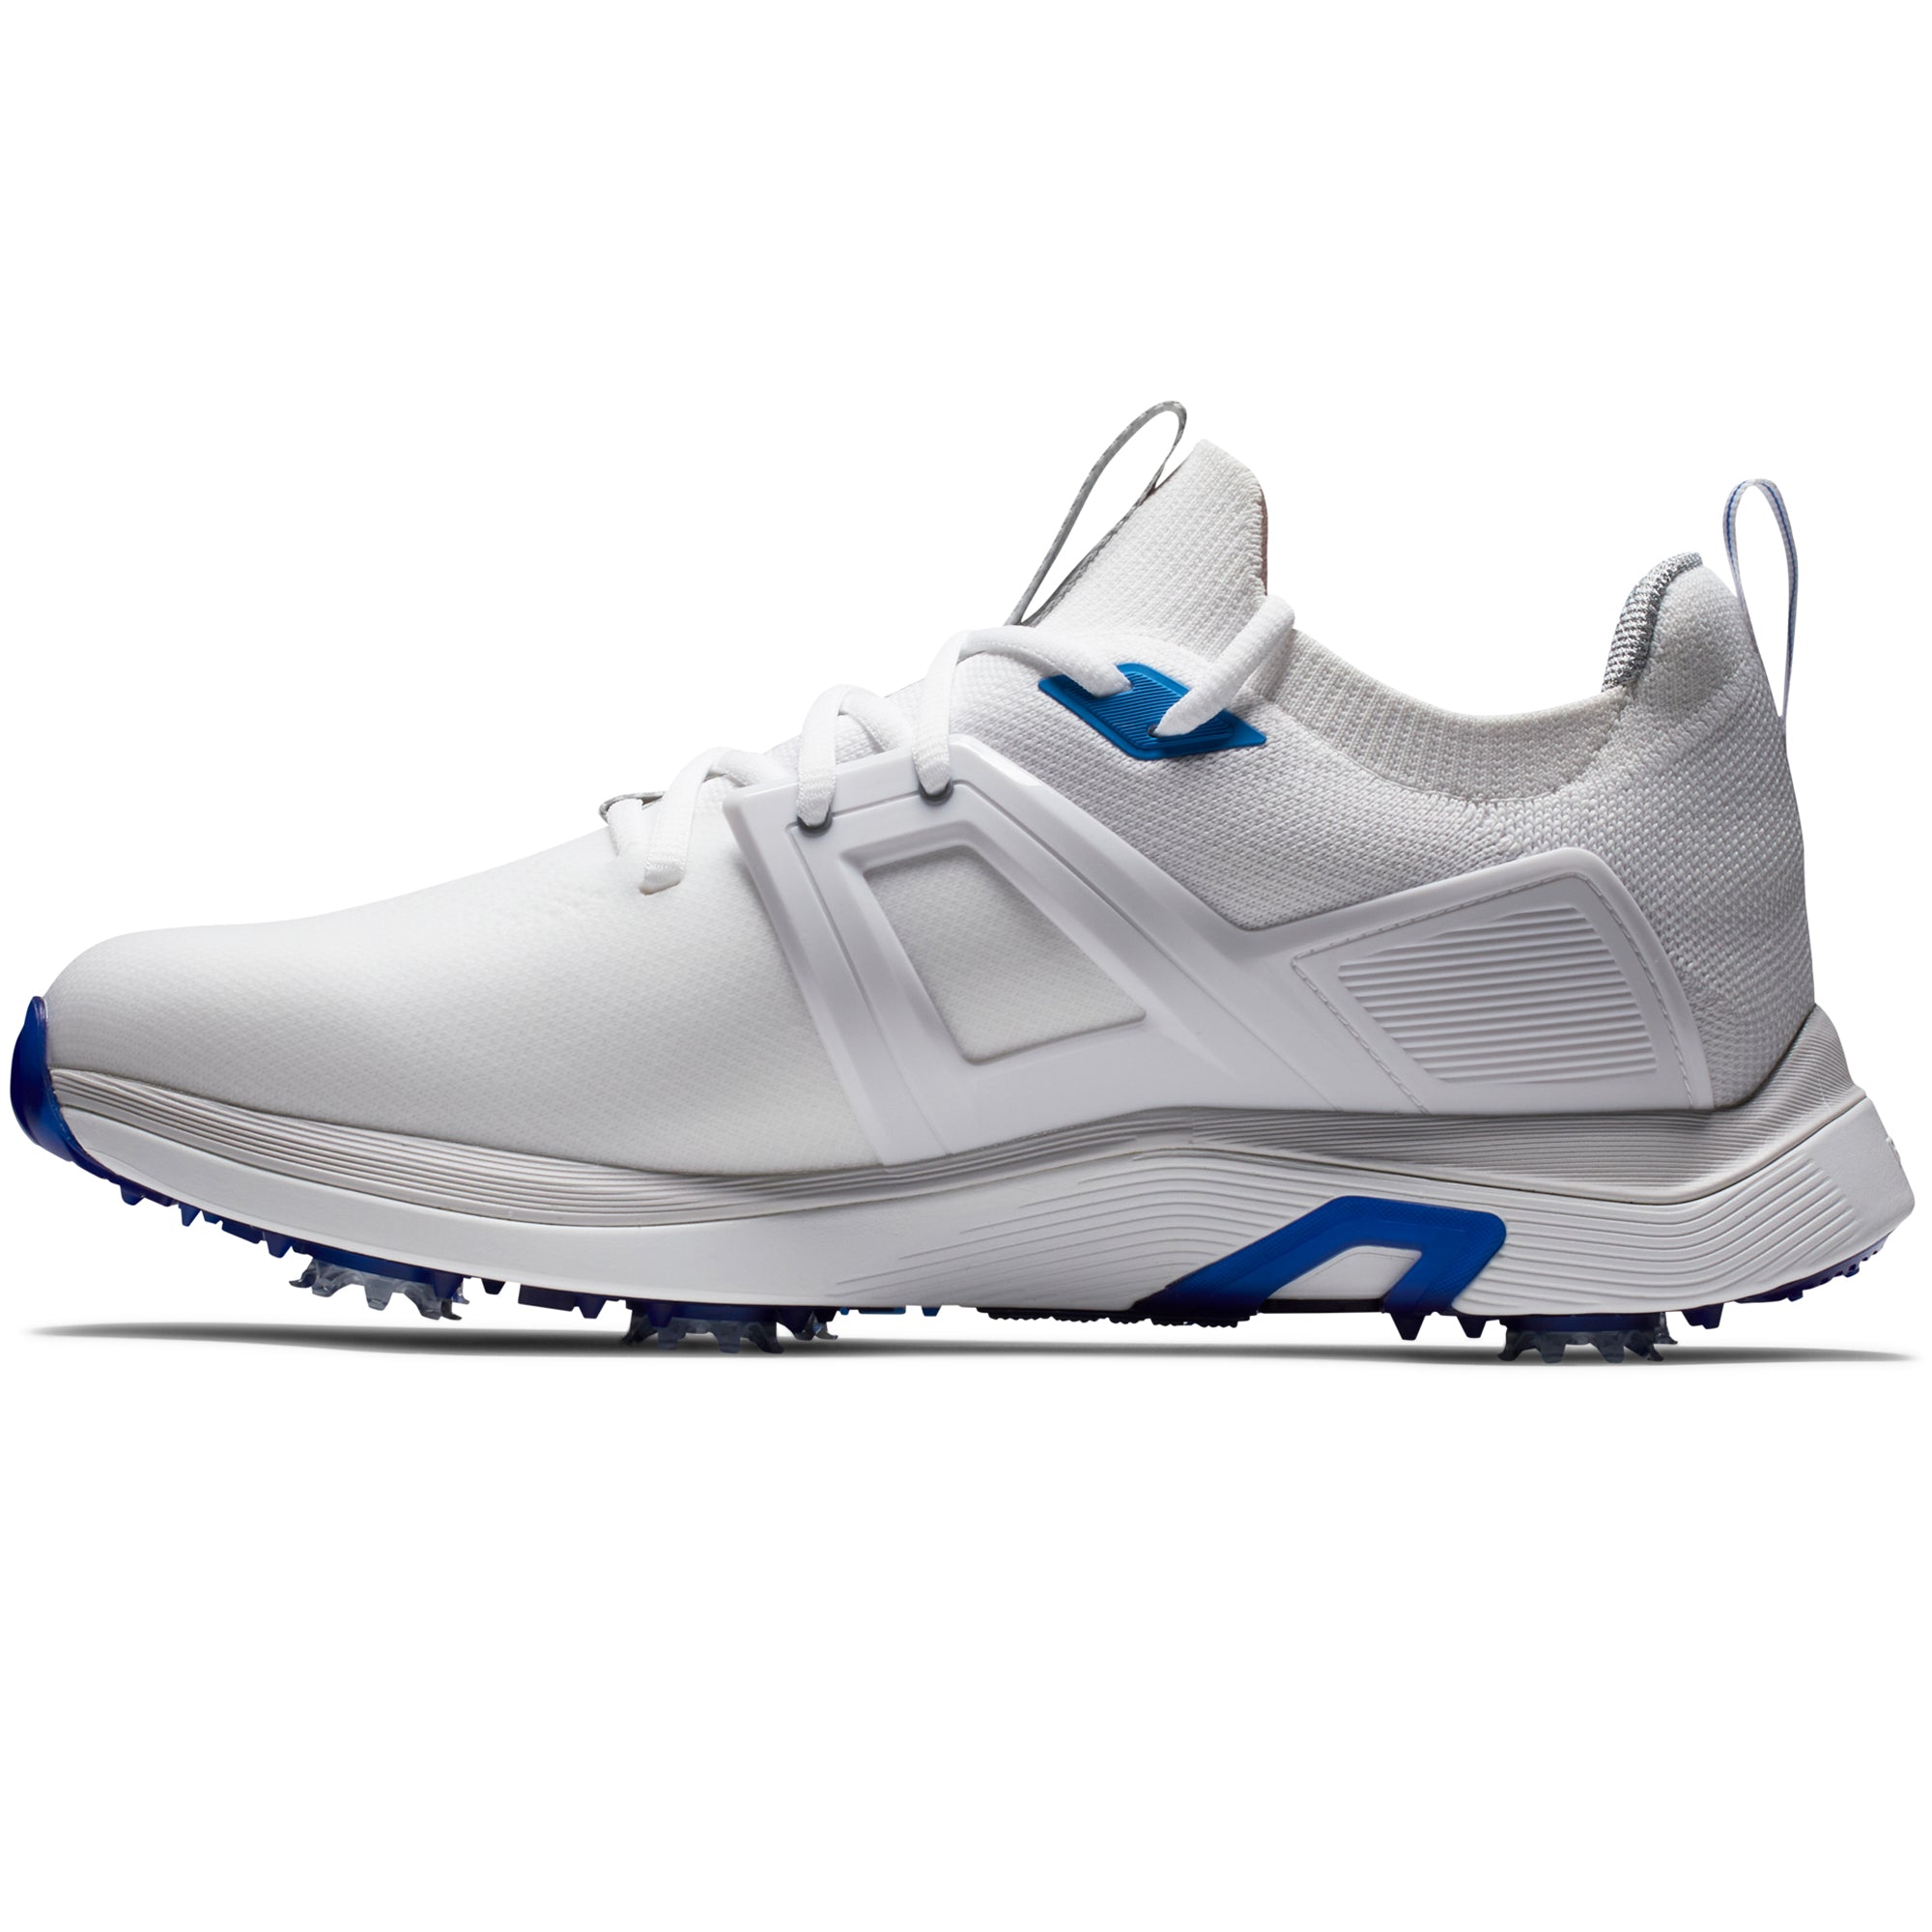 footjoy-hyperflex-golf-shoes-51118-white-blue-pink